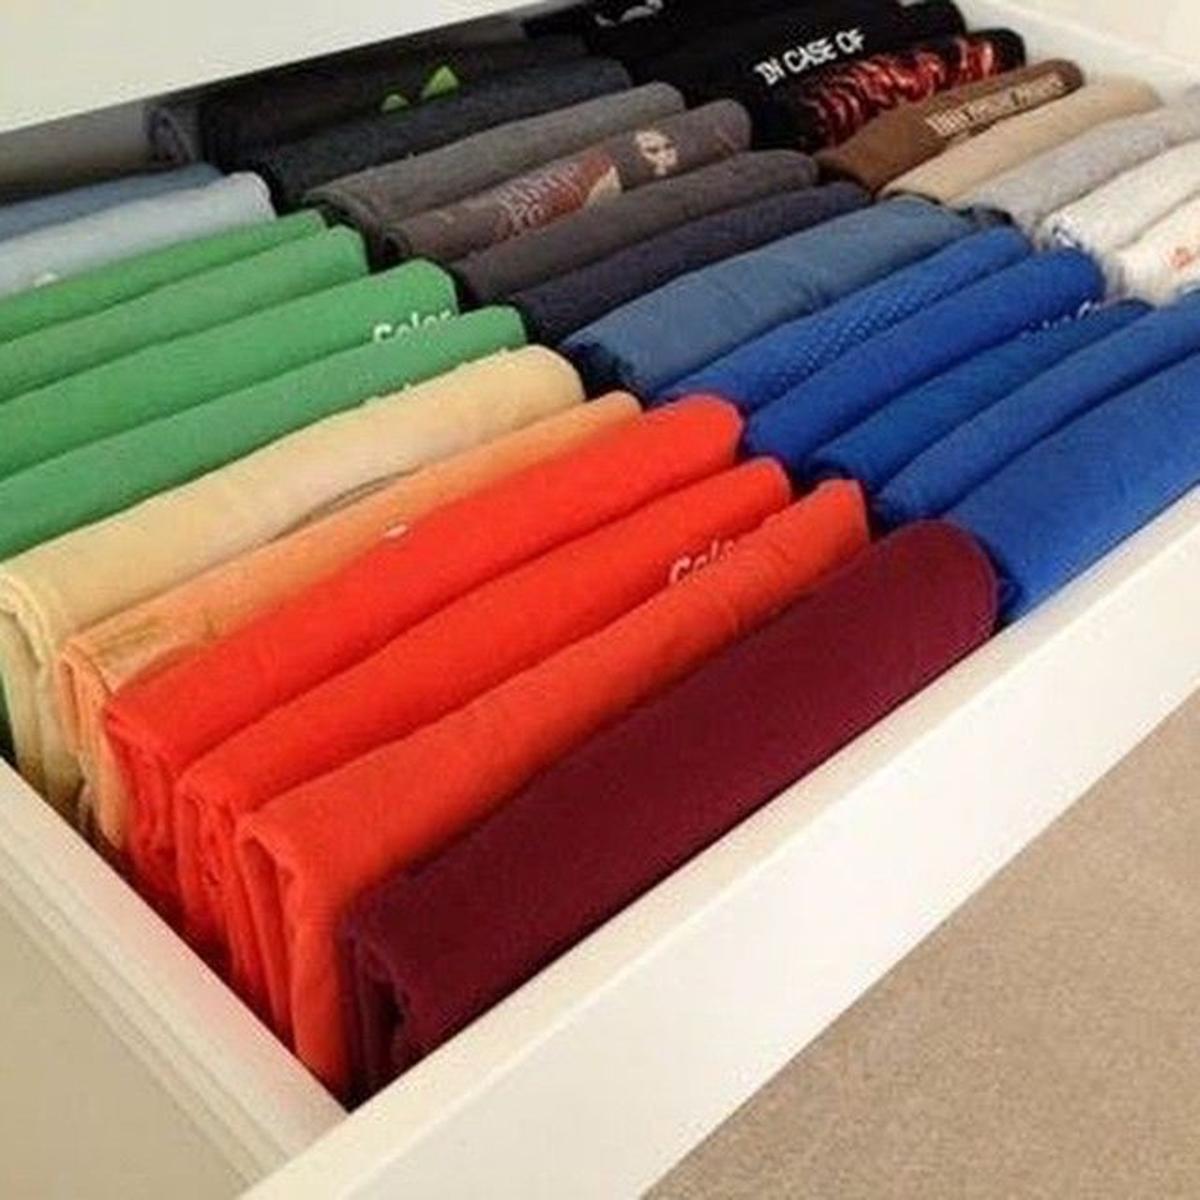 3. Organiza tus prendas por colores.